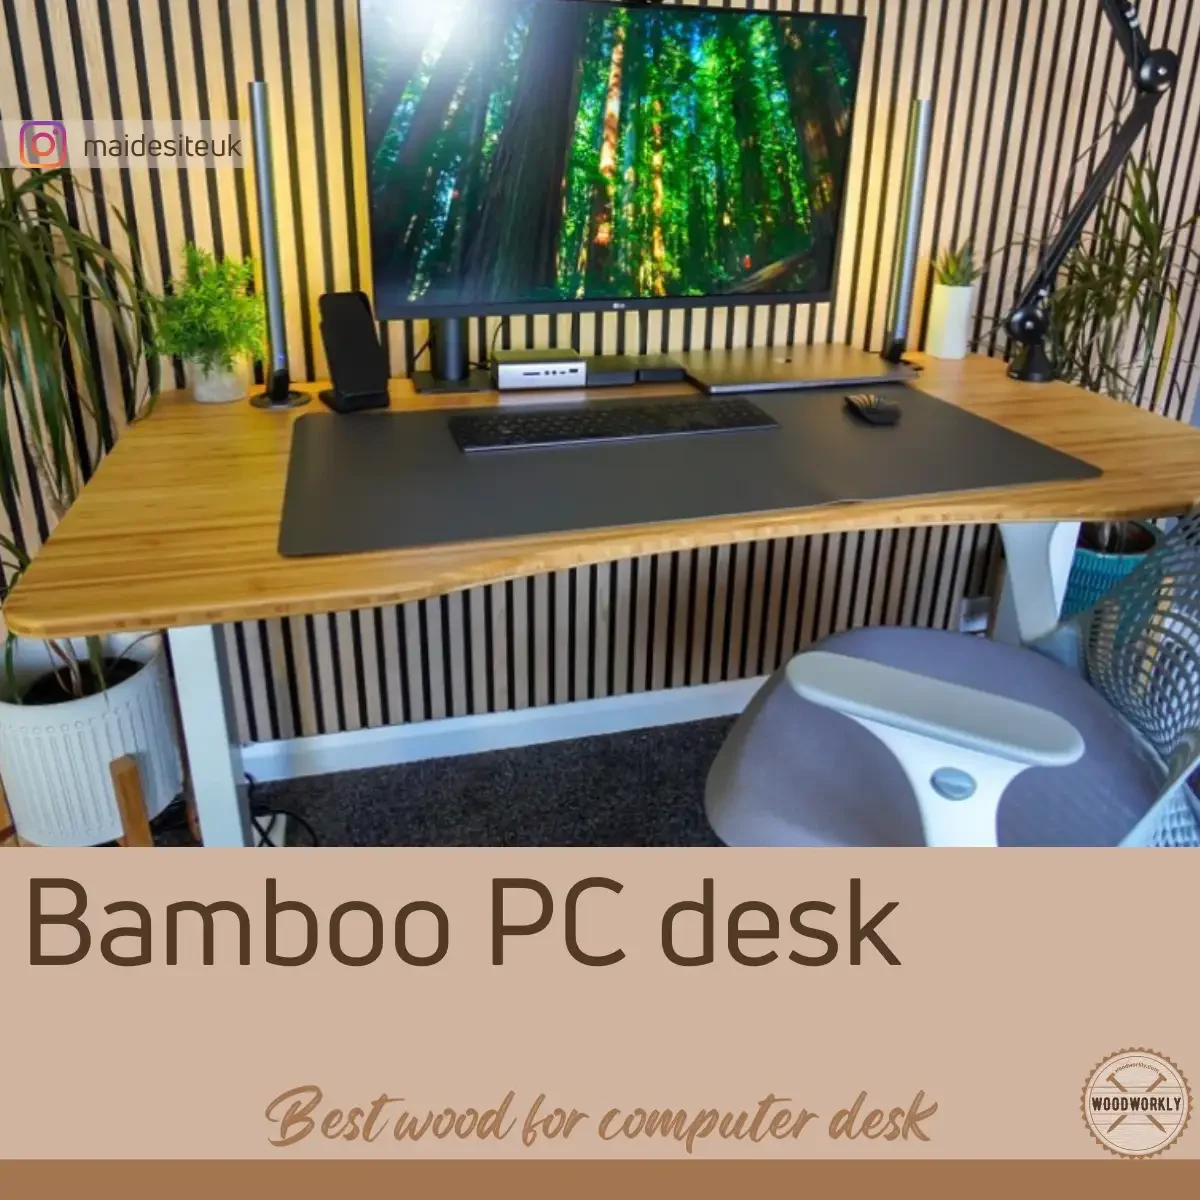 Bamboo PC desk